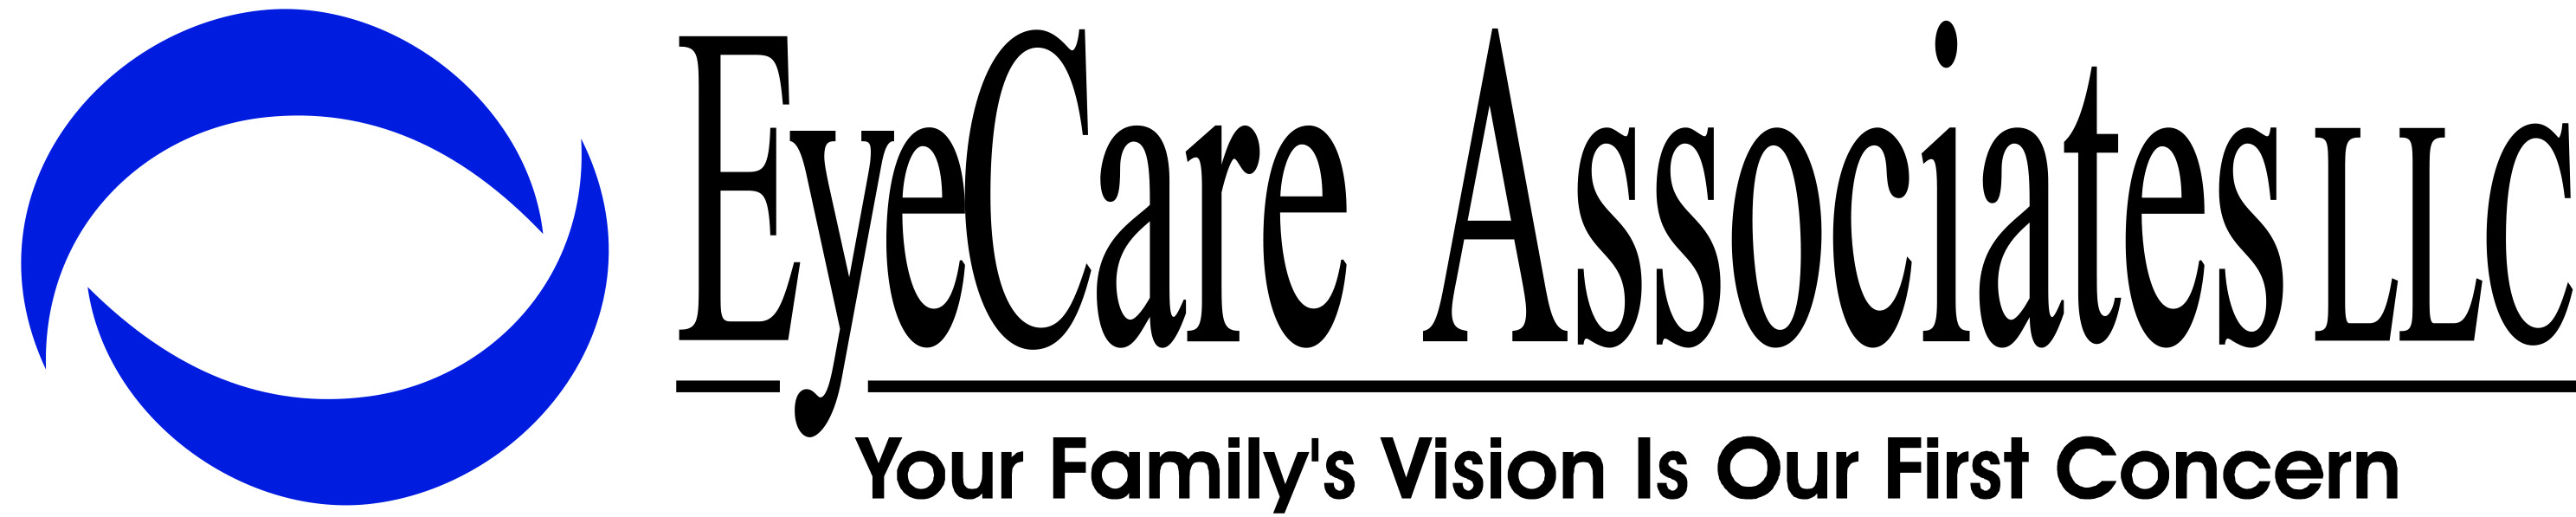 Eyecare Associates LLC Logo